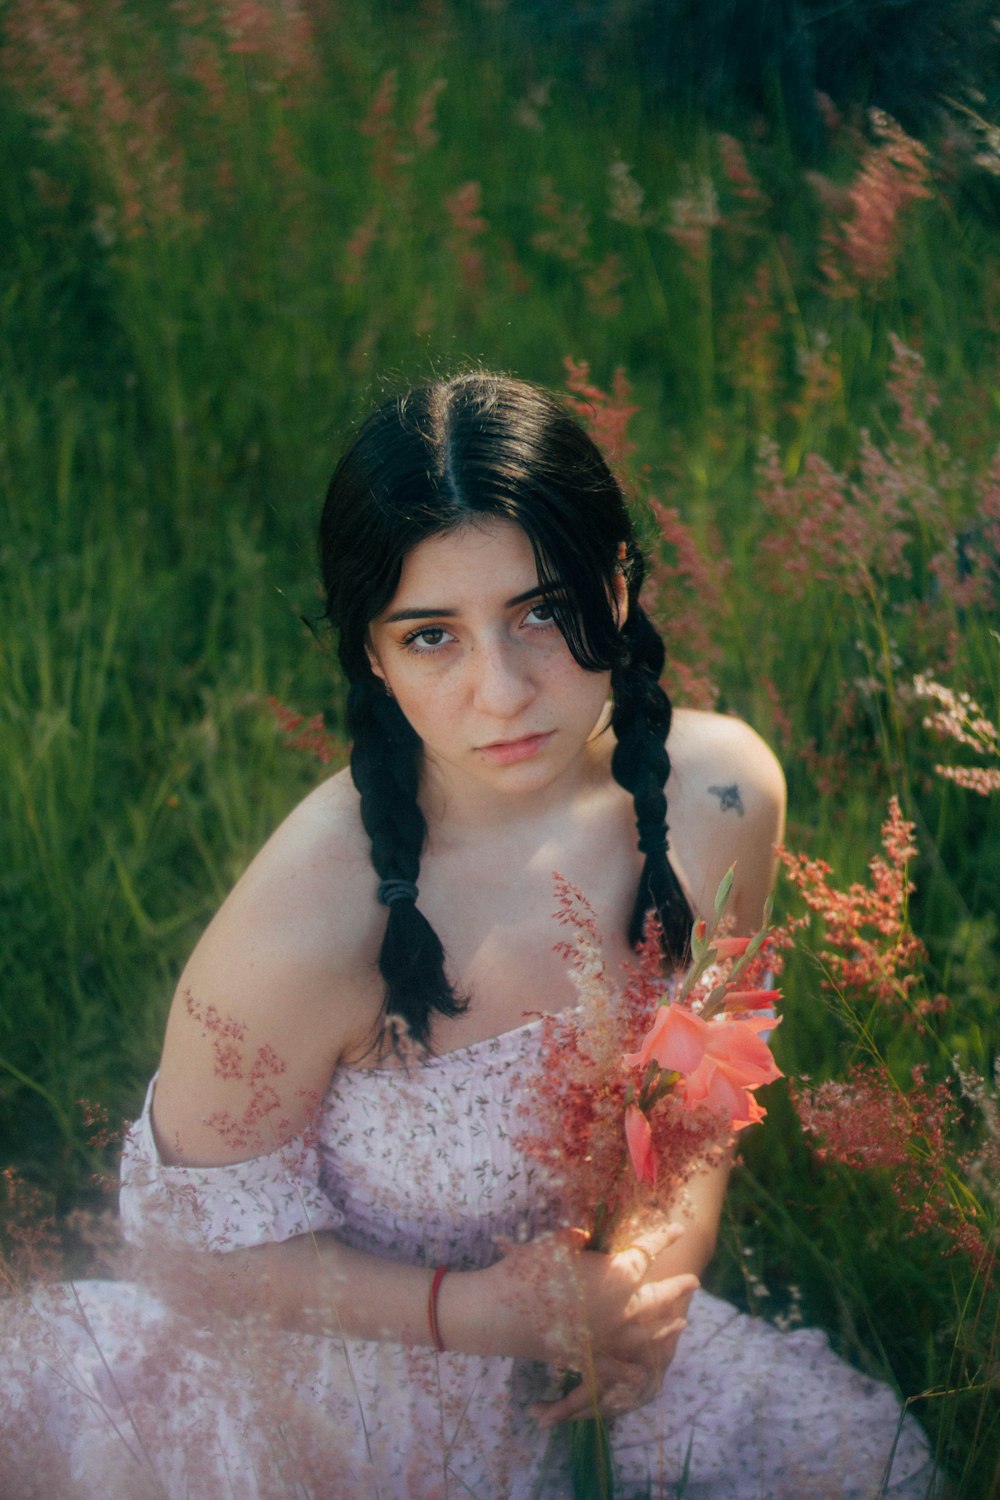 a woman in a dress sitting in a field of flowers